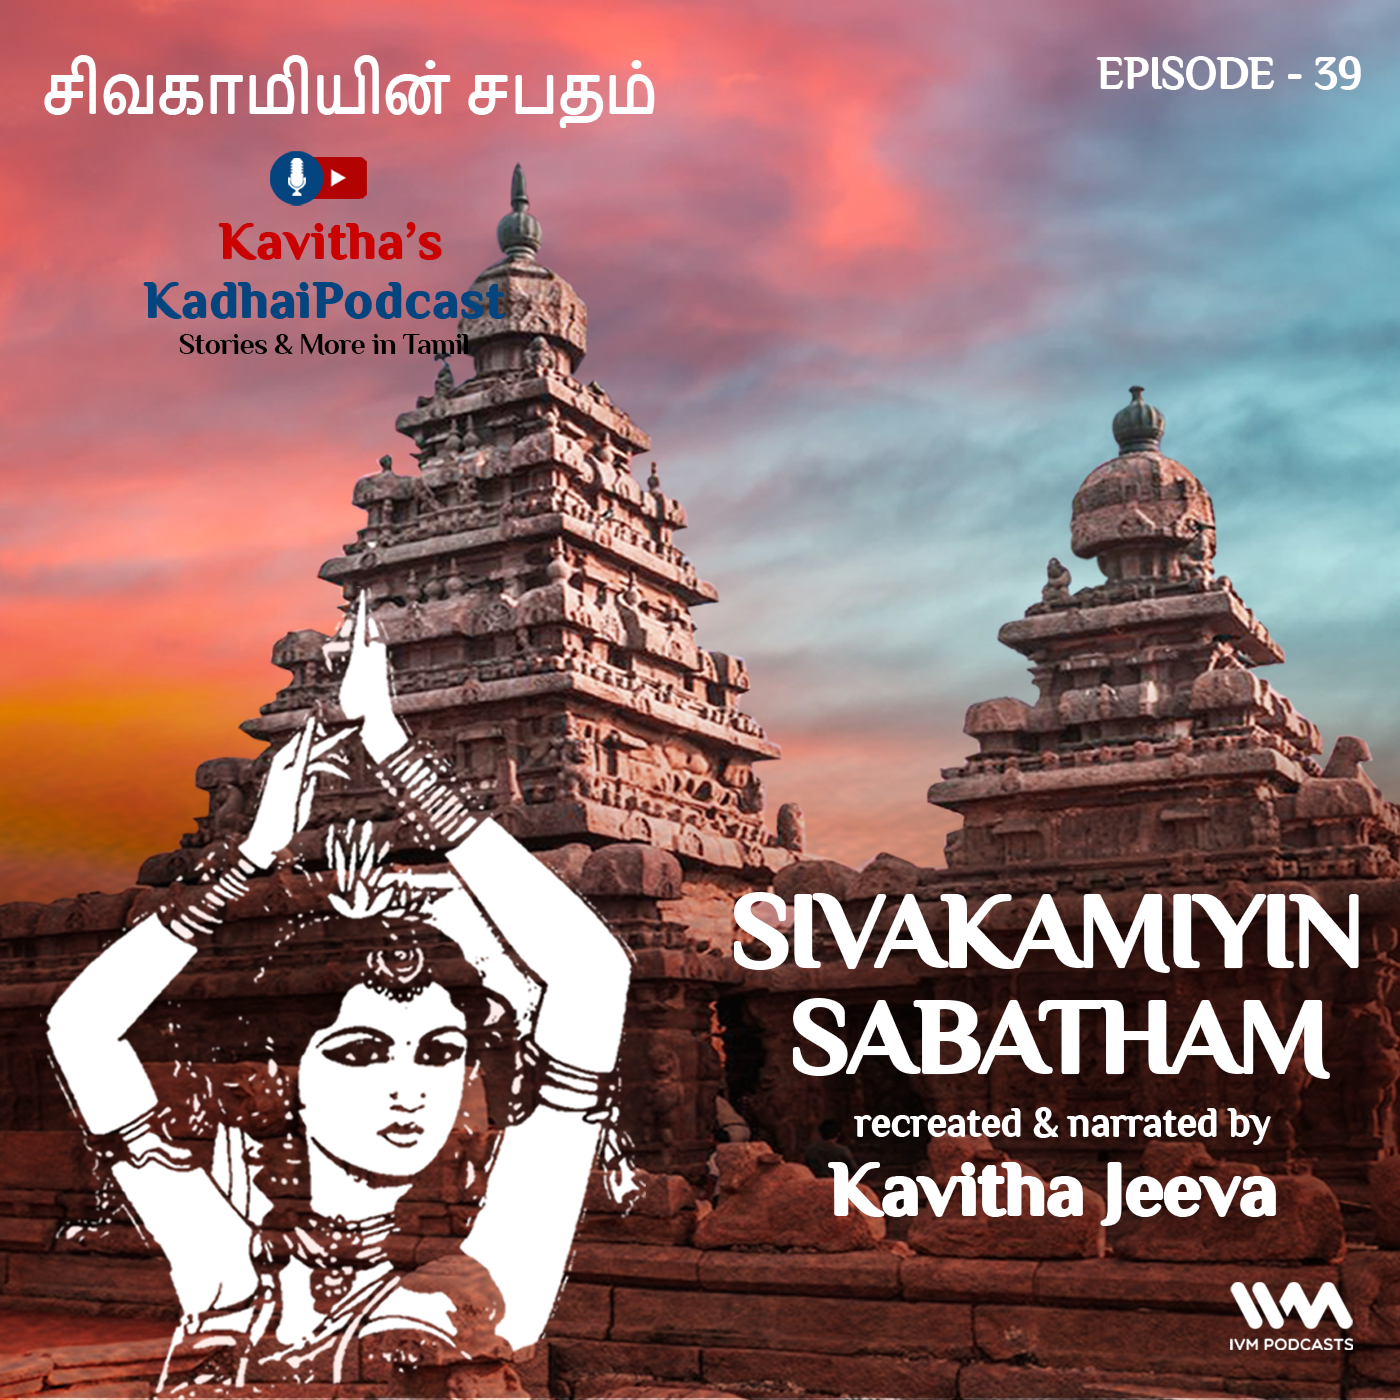 KadhaiPodcast's Sivakamiyin Sabatham - Episode # 39